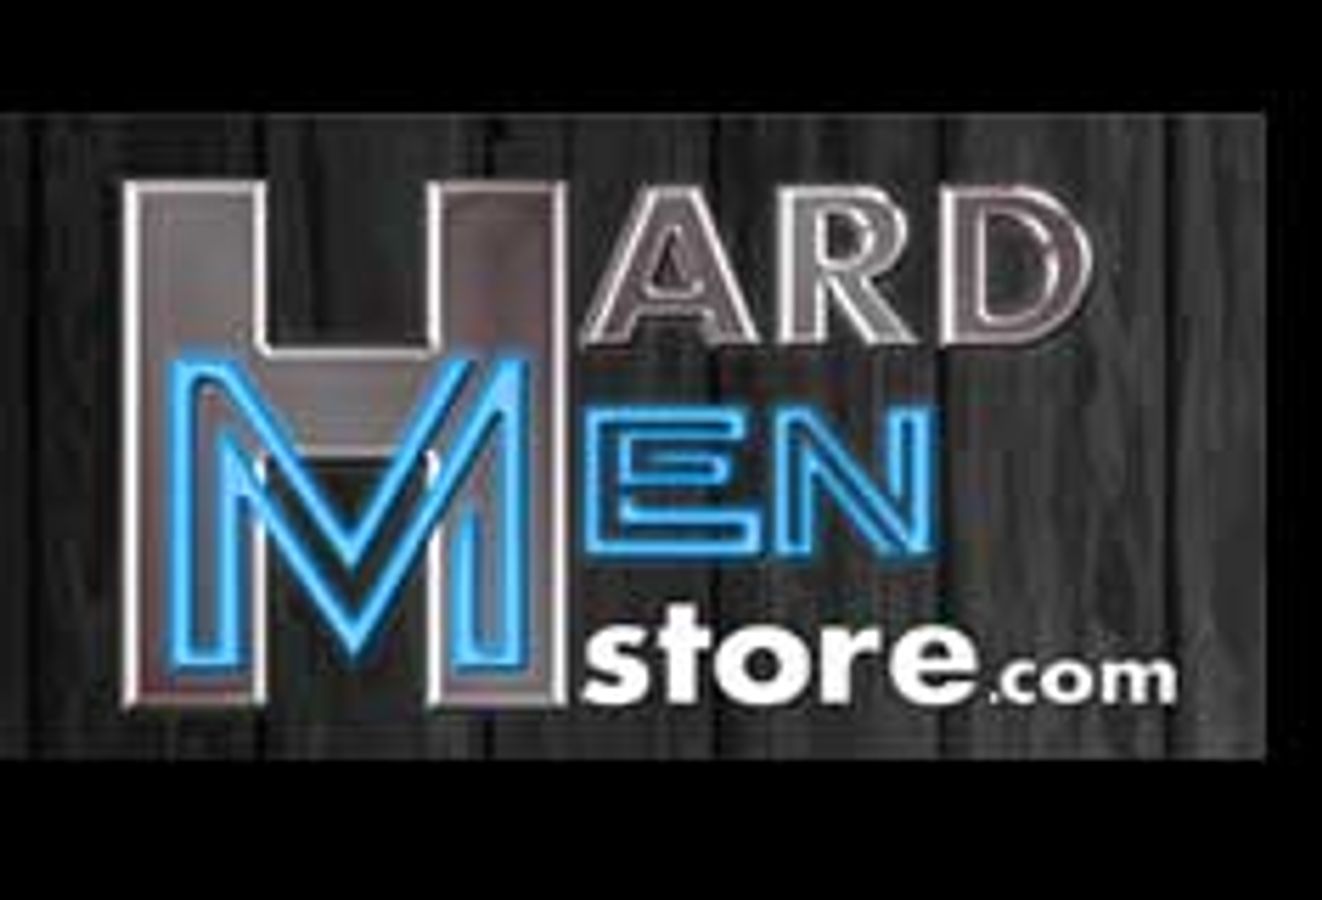 HardMenStore.com